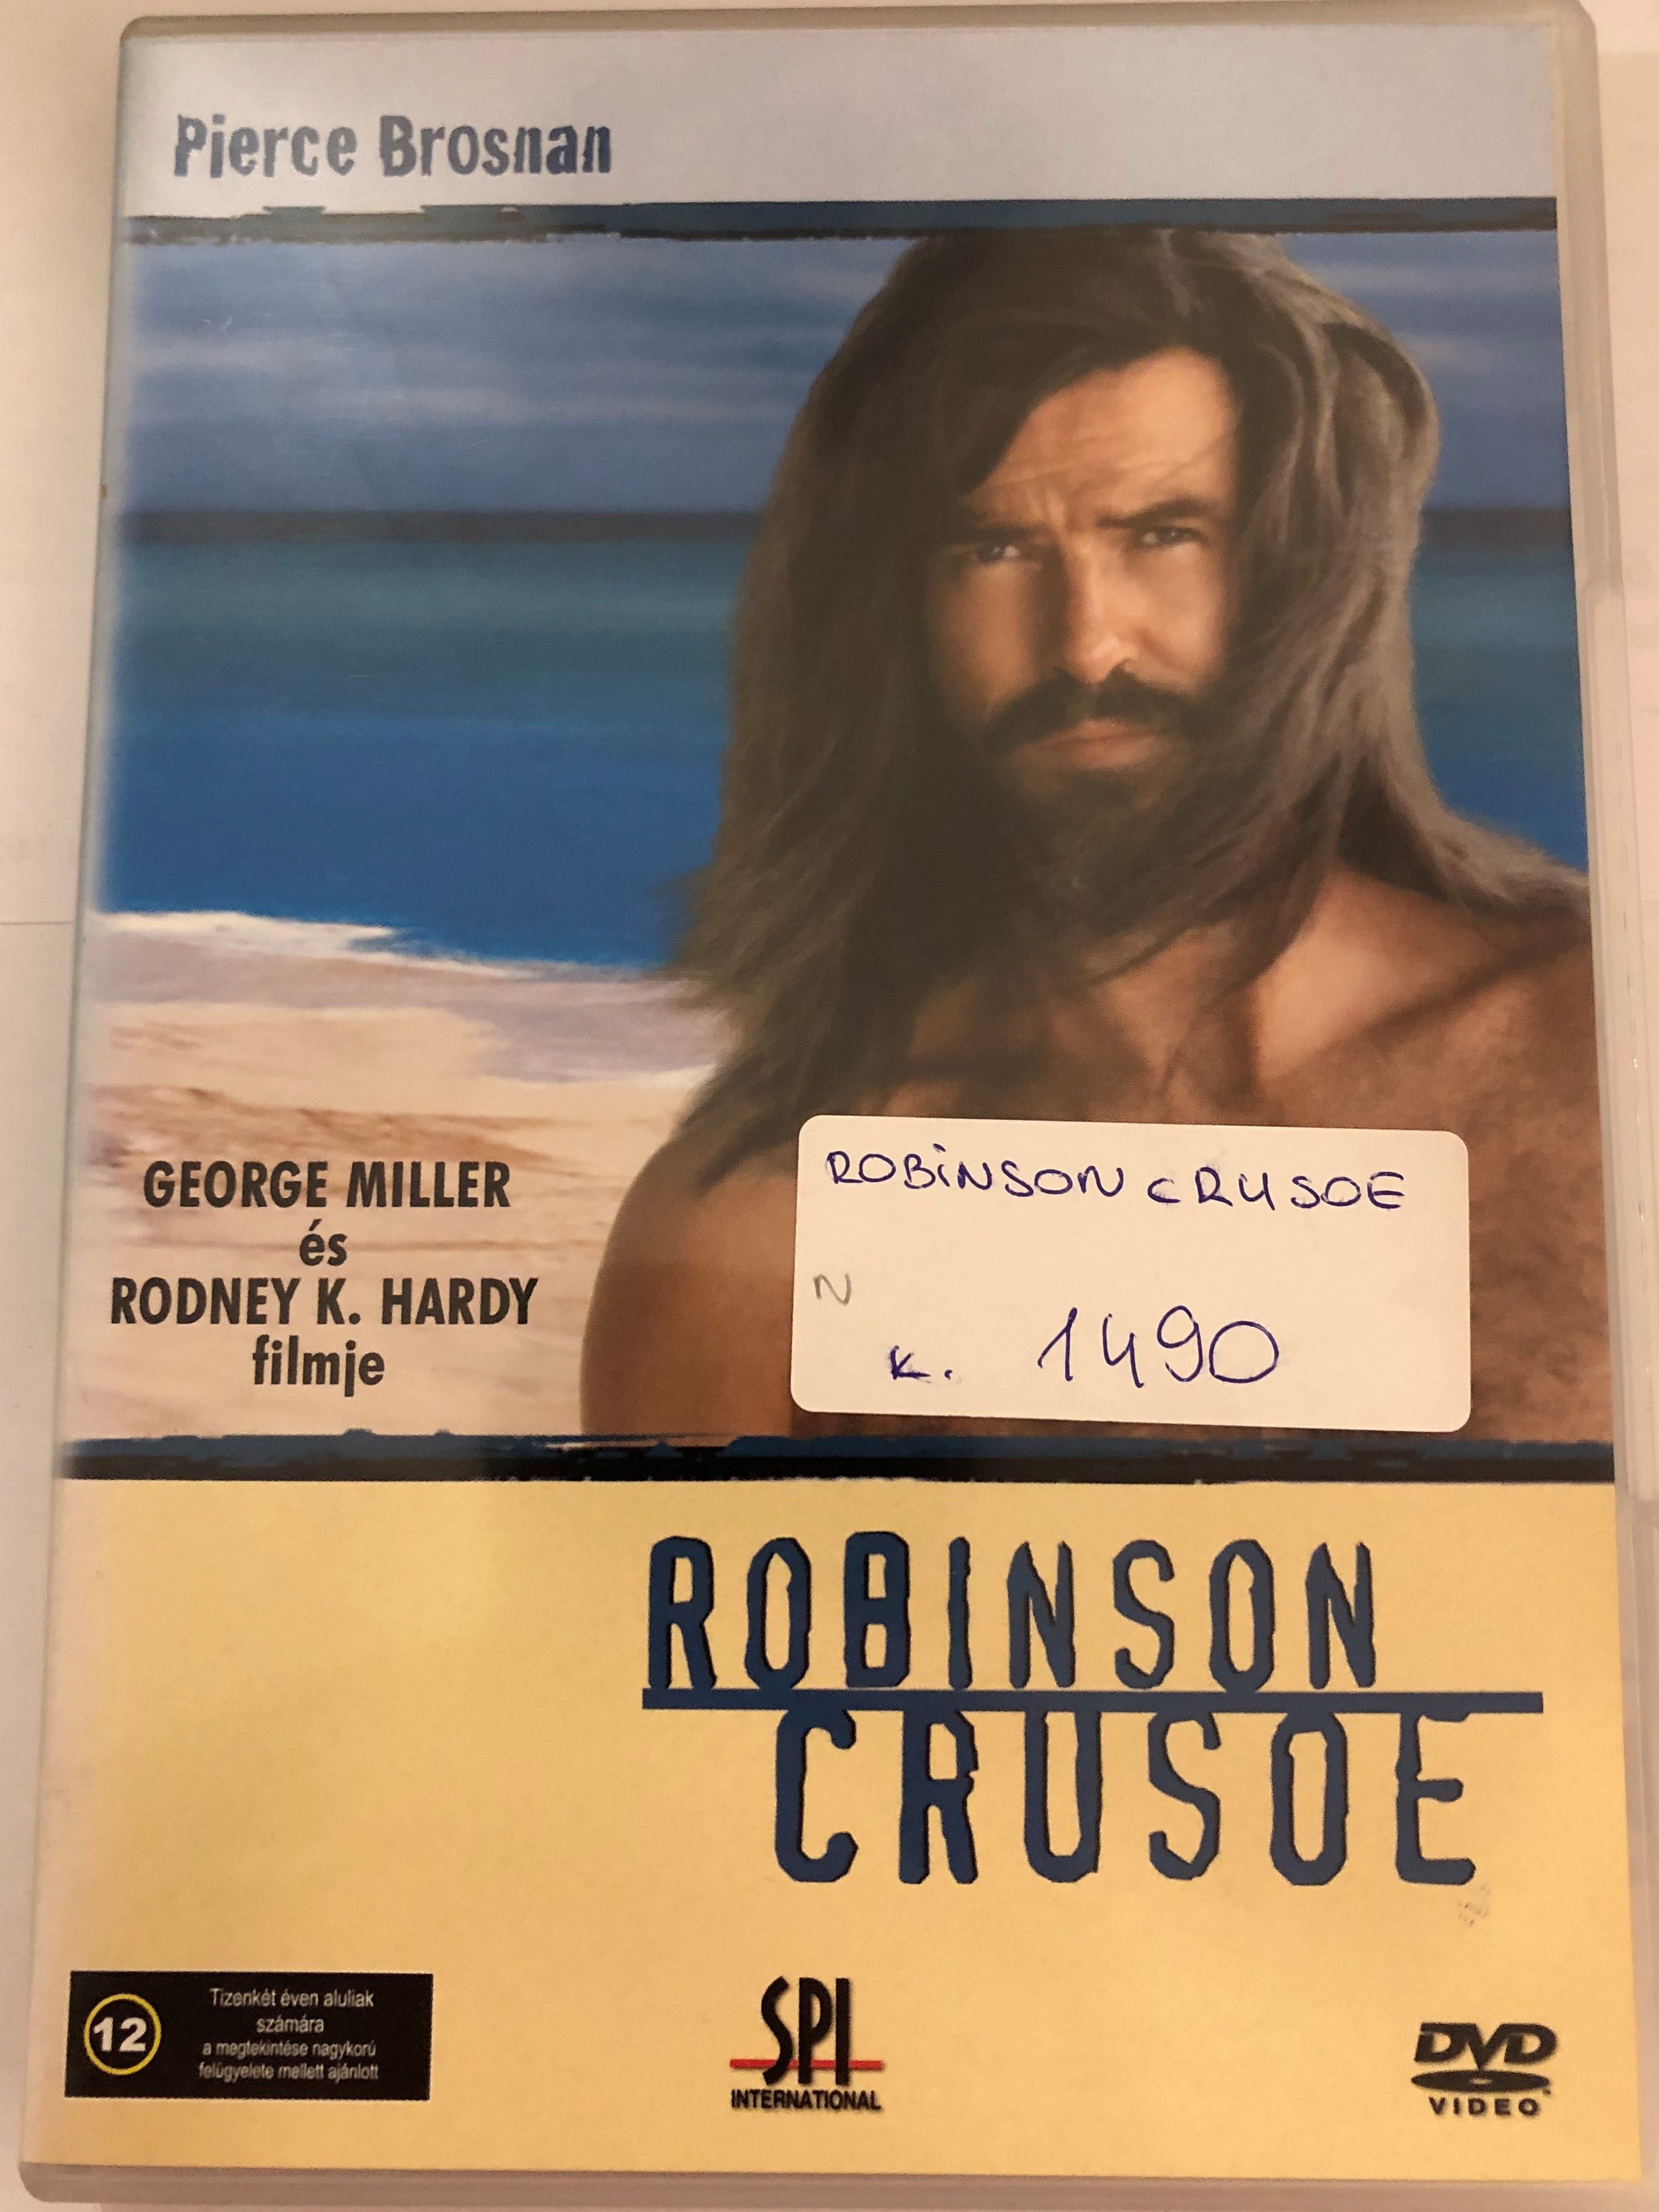 Daniel Defoe's Robinson Crusoe DVD 1997 Robinson Crusoe / Directed by  George Miller, Rodney K Hardy / Starring: Pierce Brosnan, William Takaku,  Polly Walker, Ian Hart / Hungarian Sound & Subtitles - bibleinmylanguage